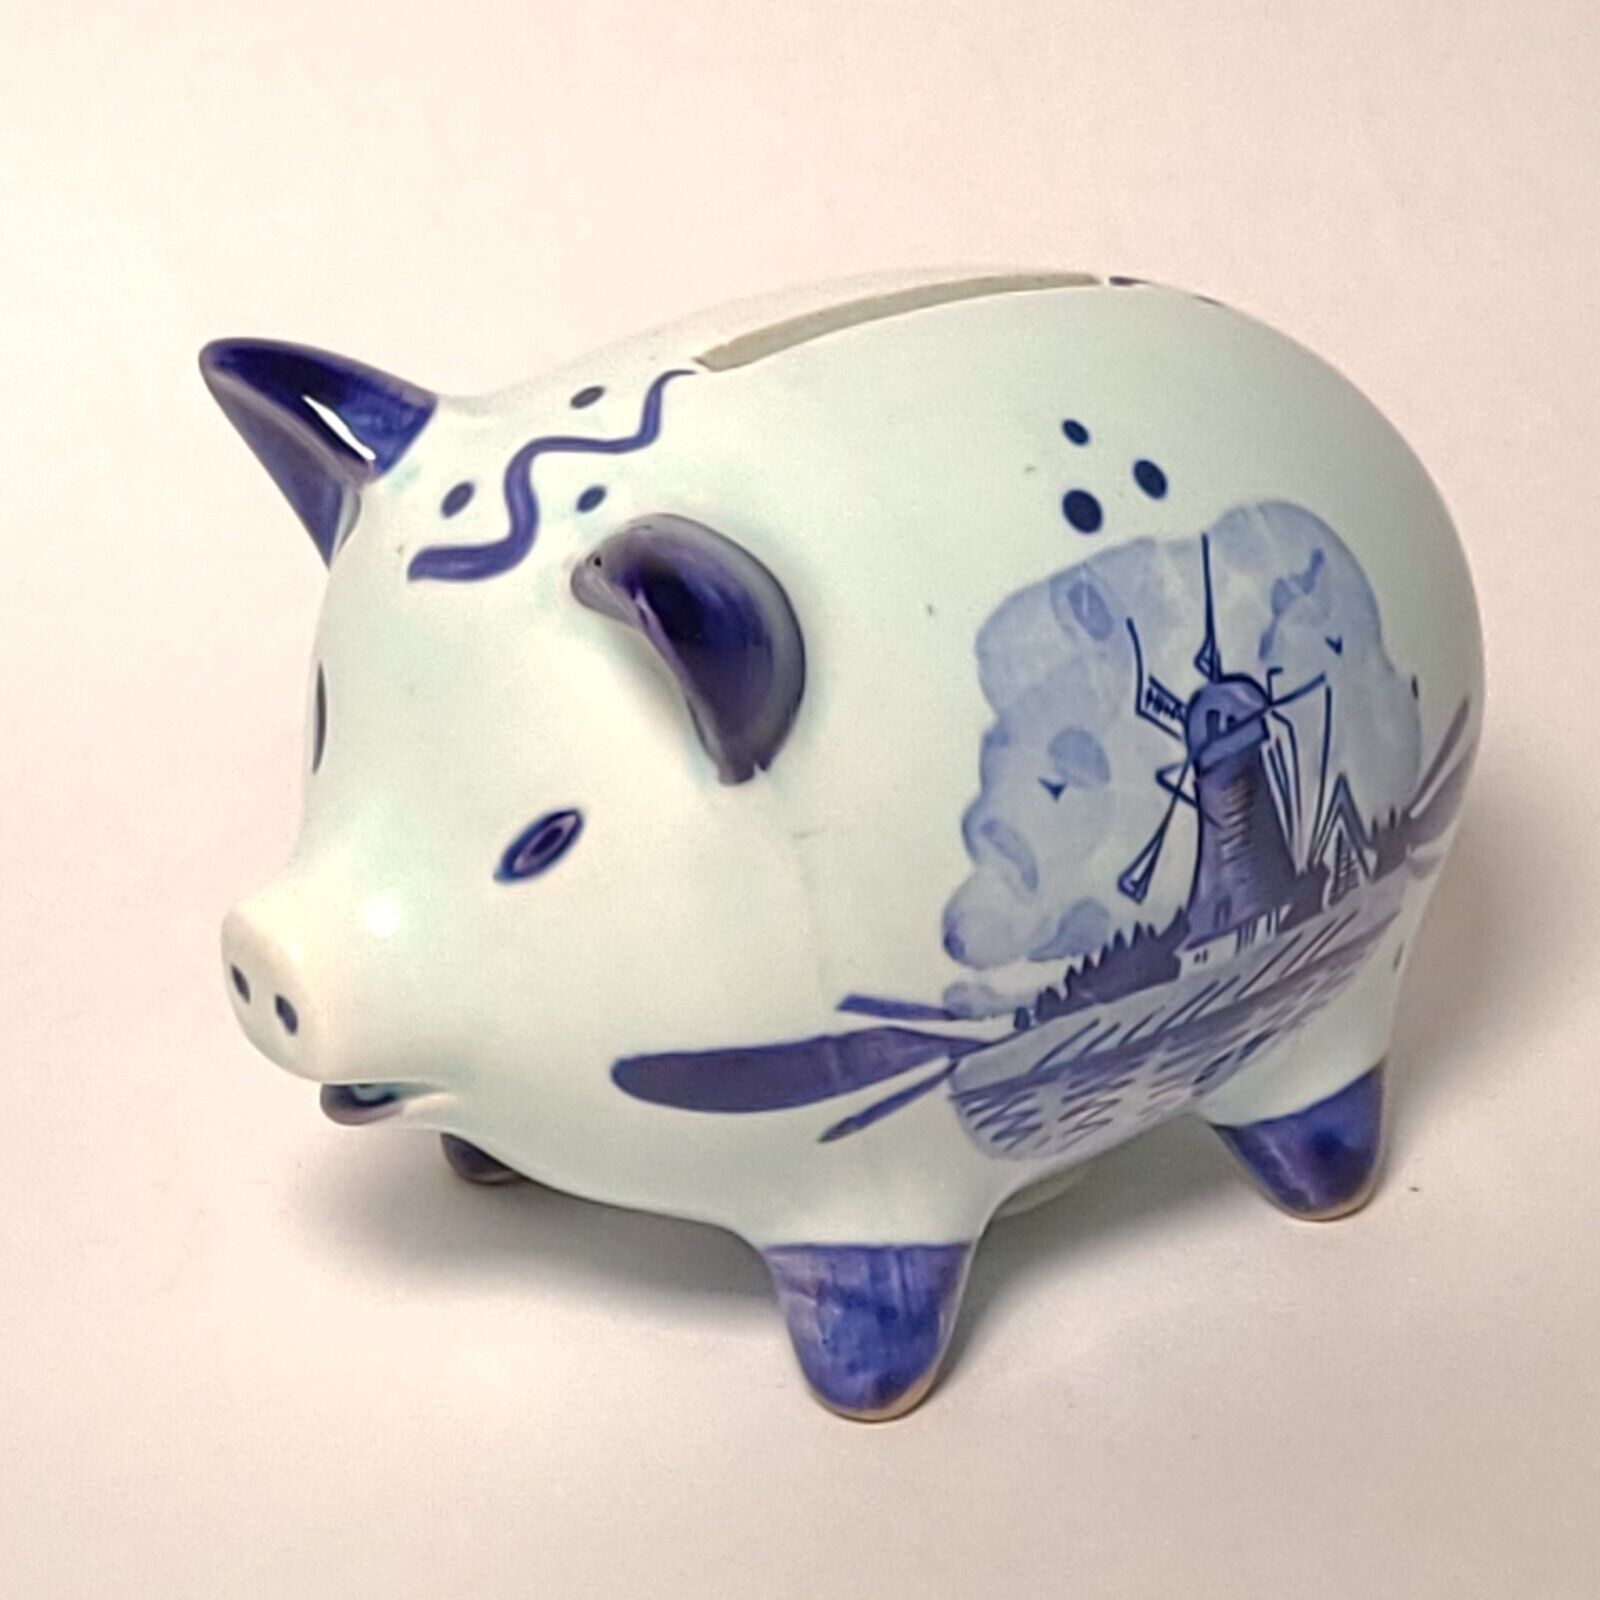 Vintage DBL Brand Glazed Ceramic Blue & White Piggy Bank, With Windmill Design